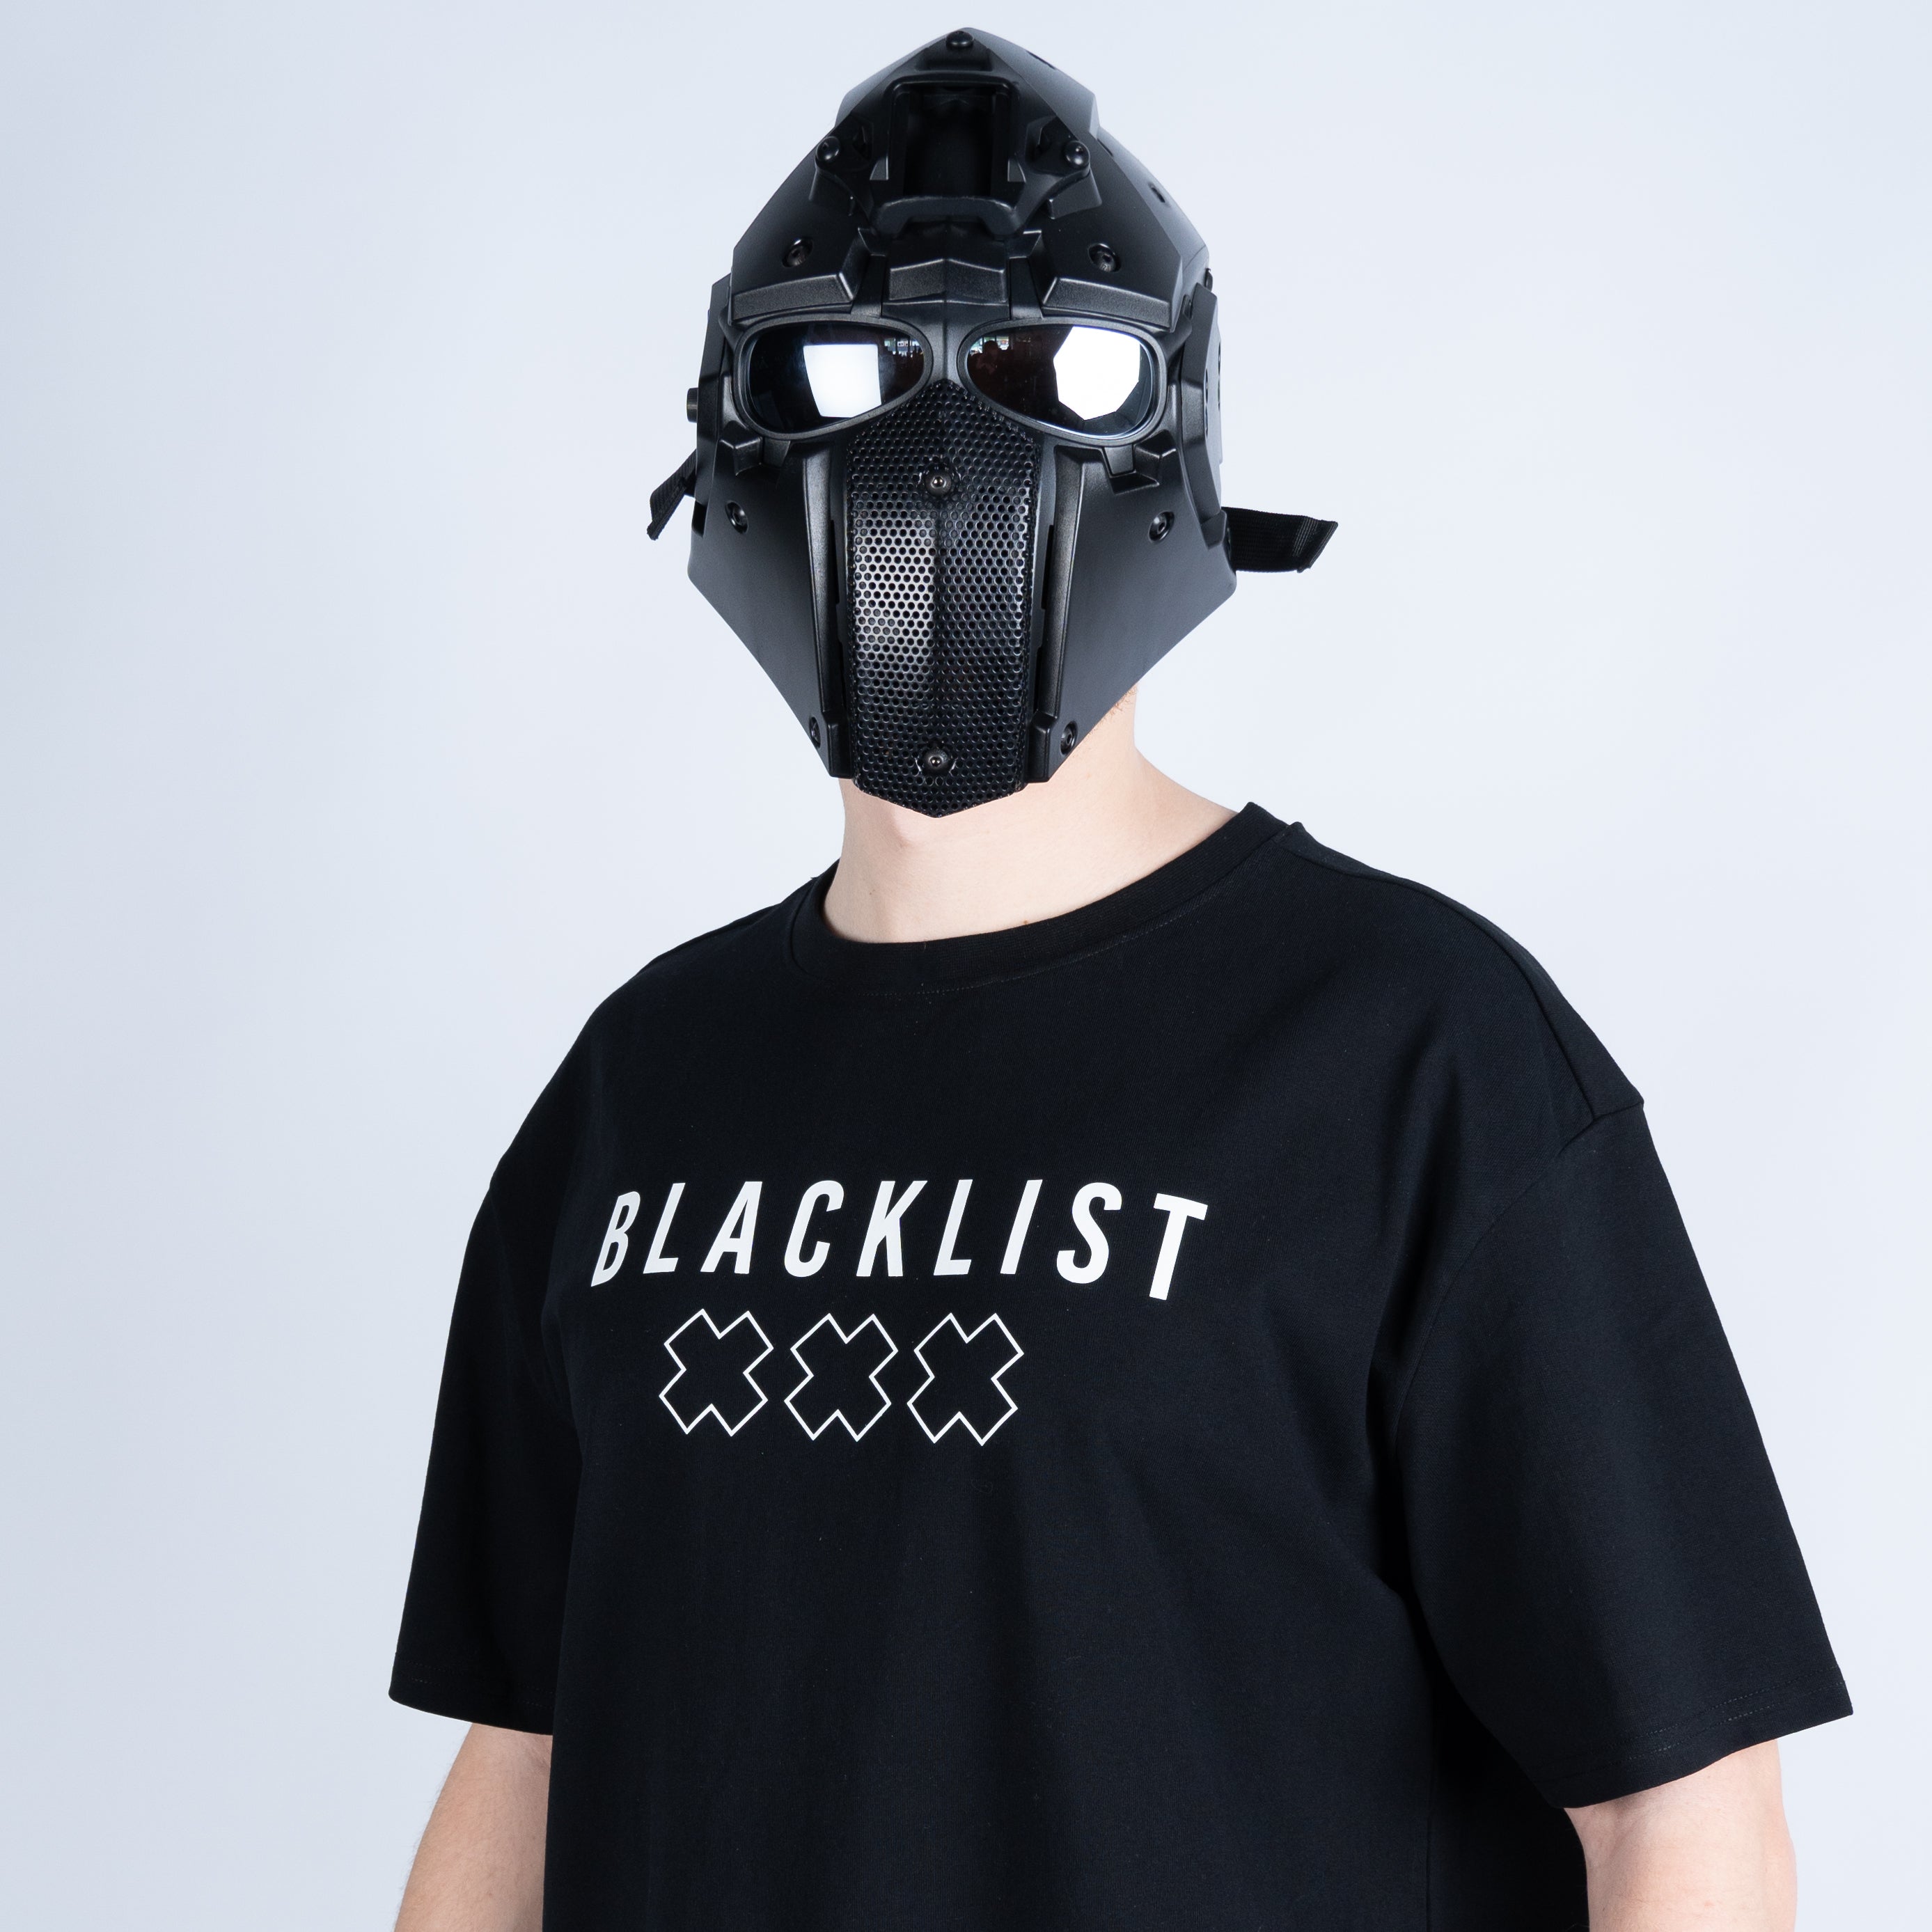 Blacklist - Fam Shirt